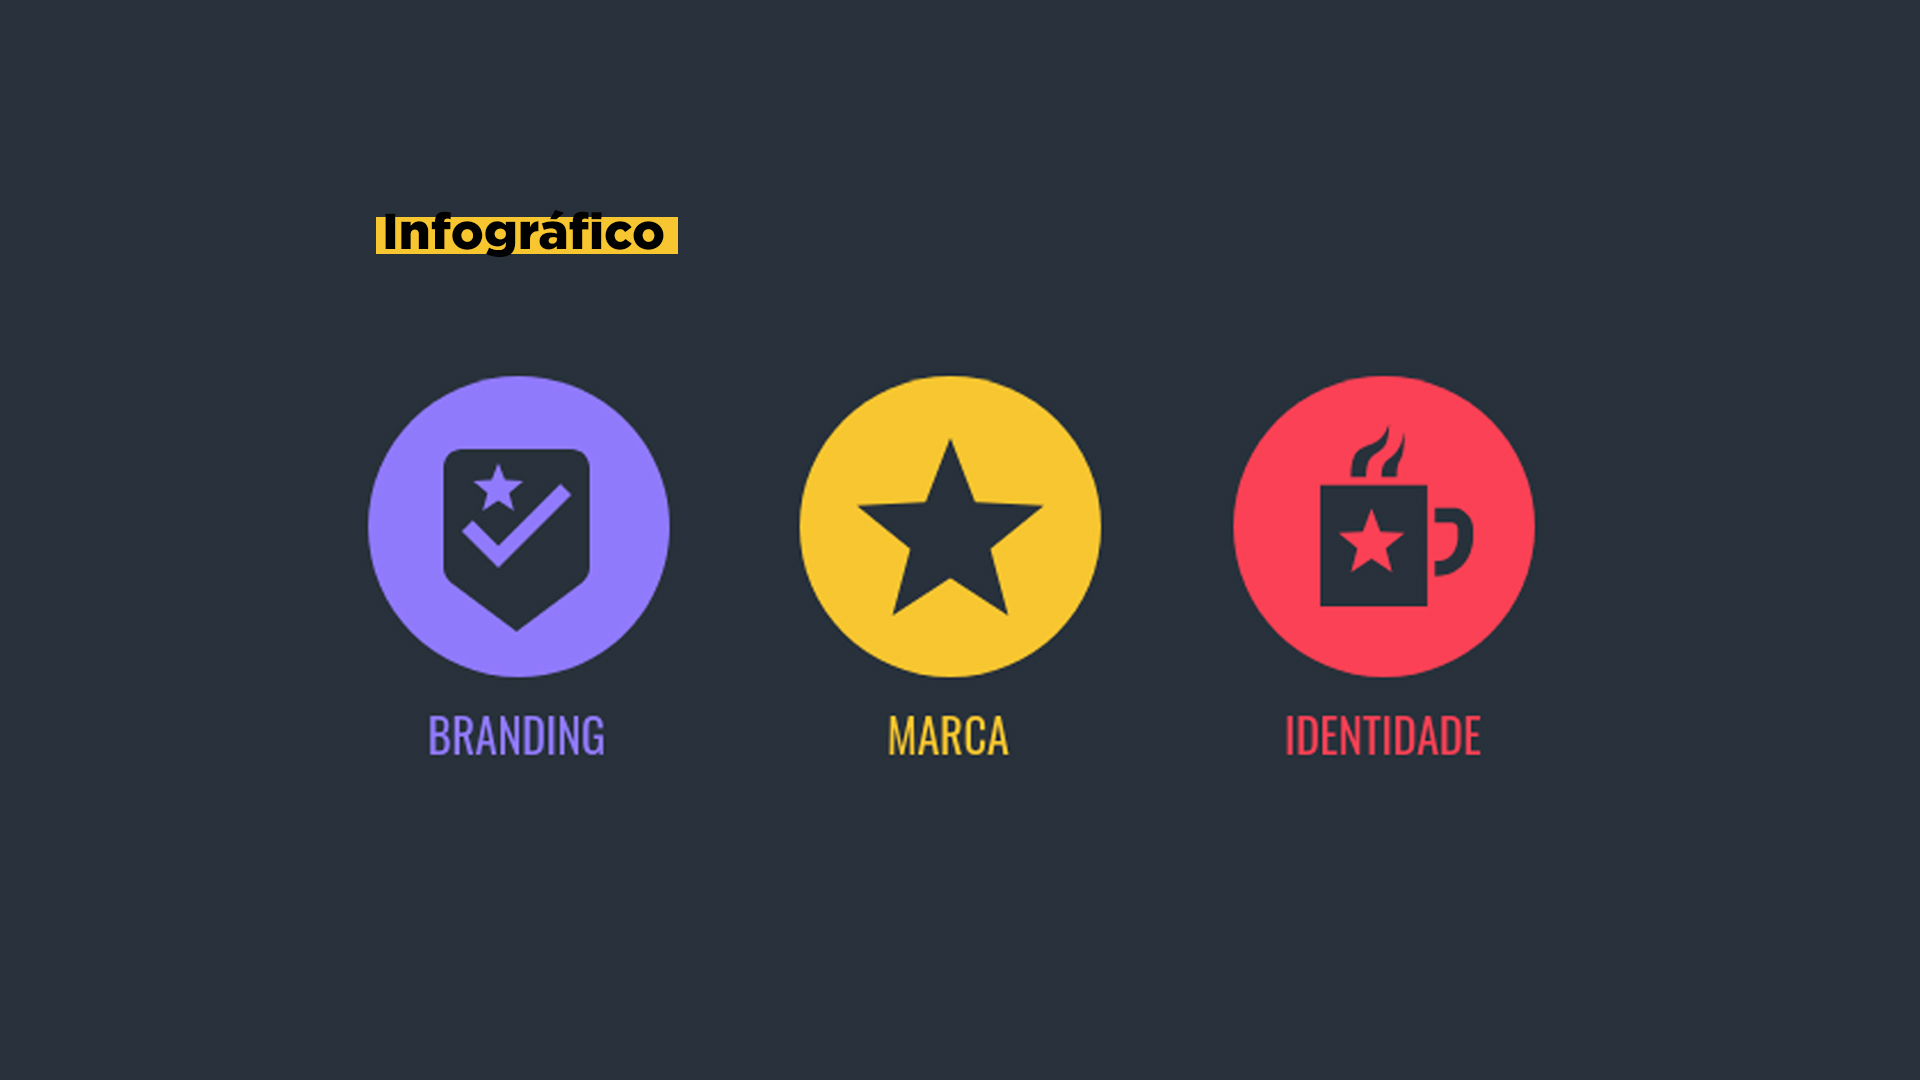 Infográfico sobre os conceitos de marca, branding e identidade visual